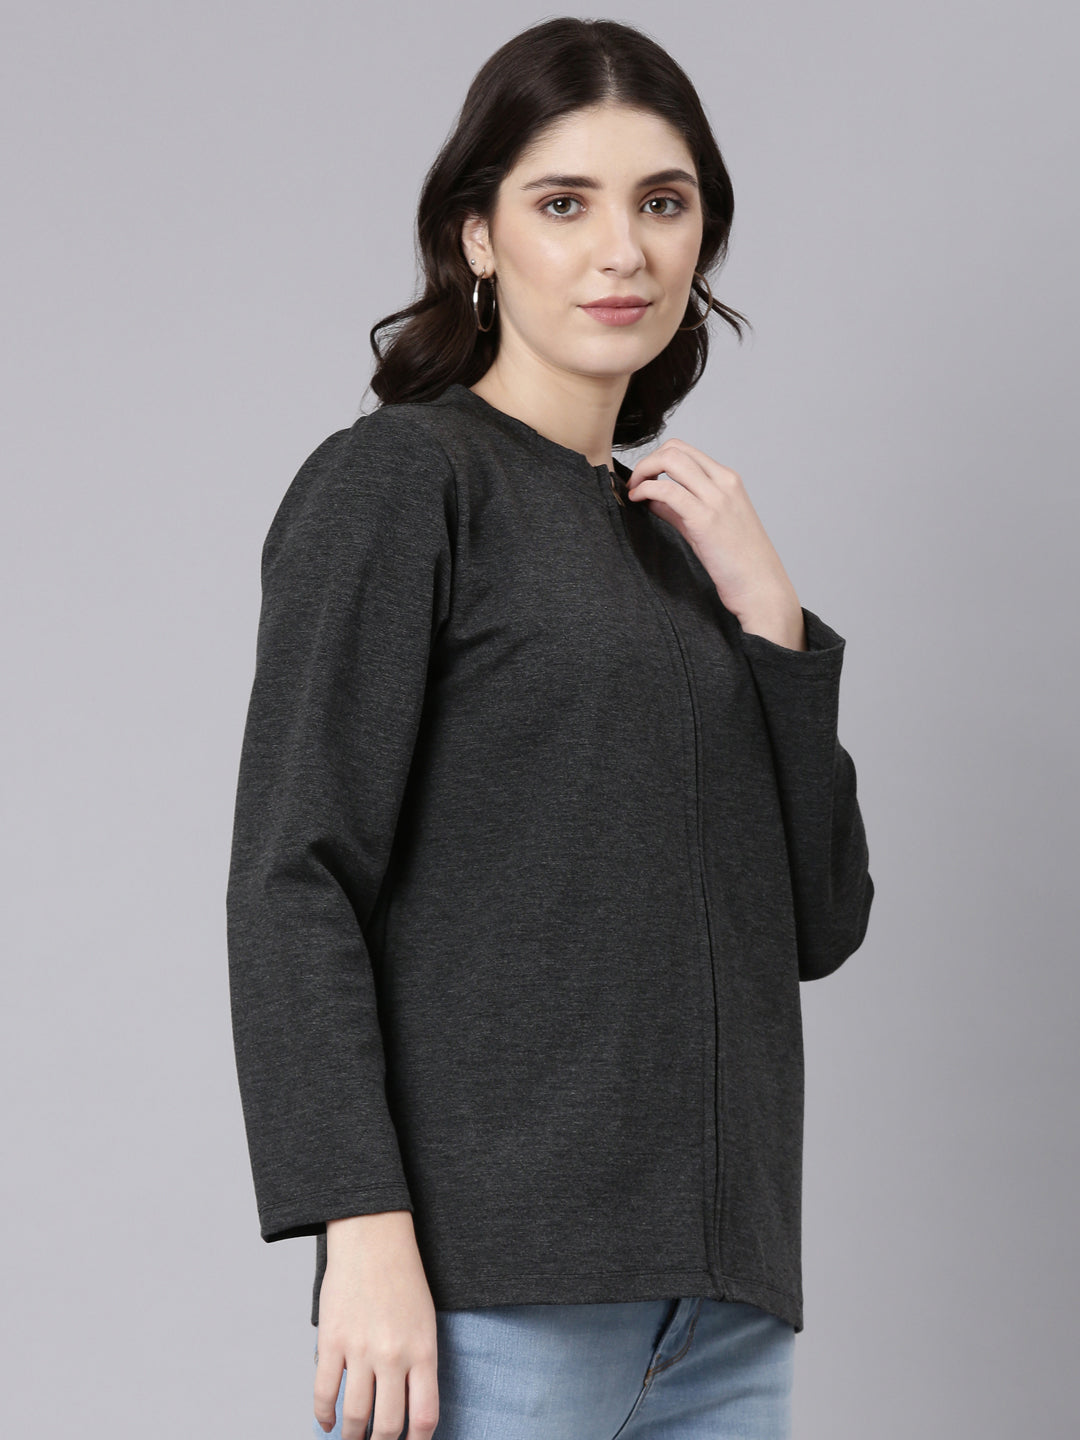 TheShaili Stretchable Cotton Jacket for Women | Full Sleeves | Zipper Closing - Casual Jacket for Women Grey melange